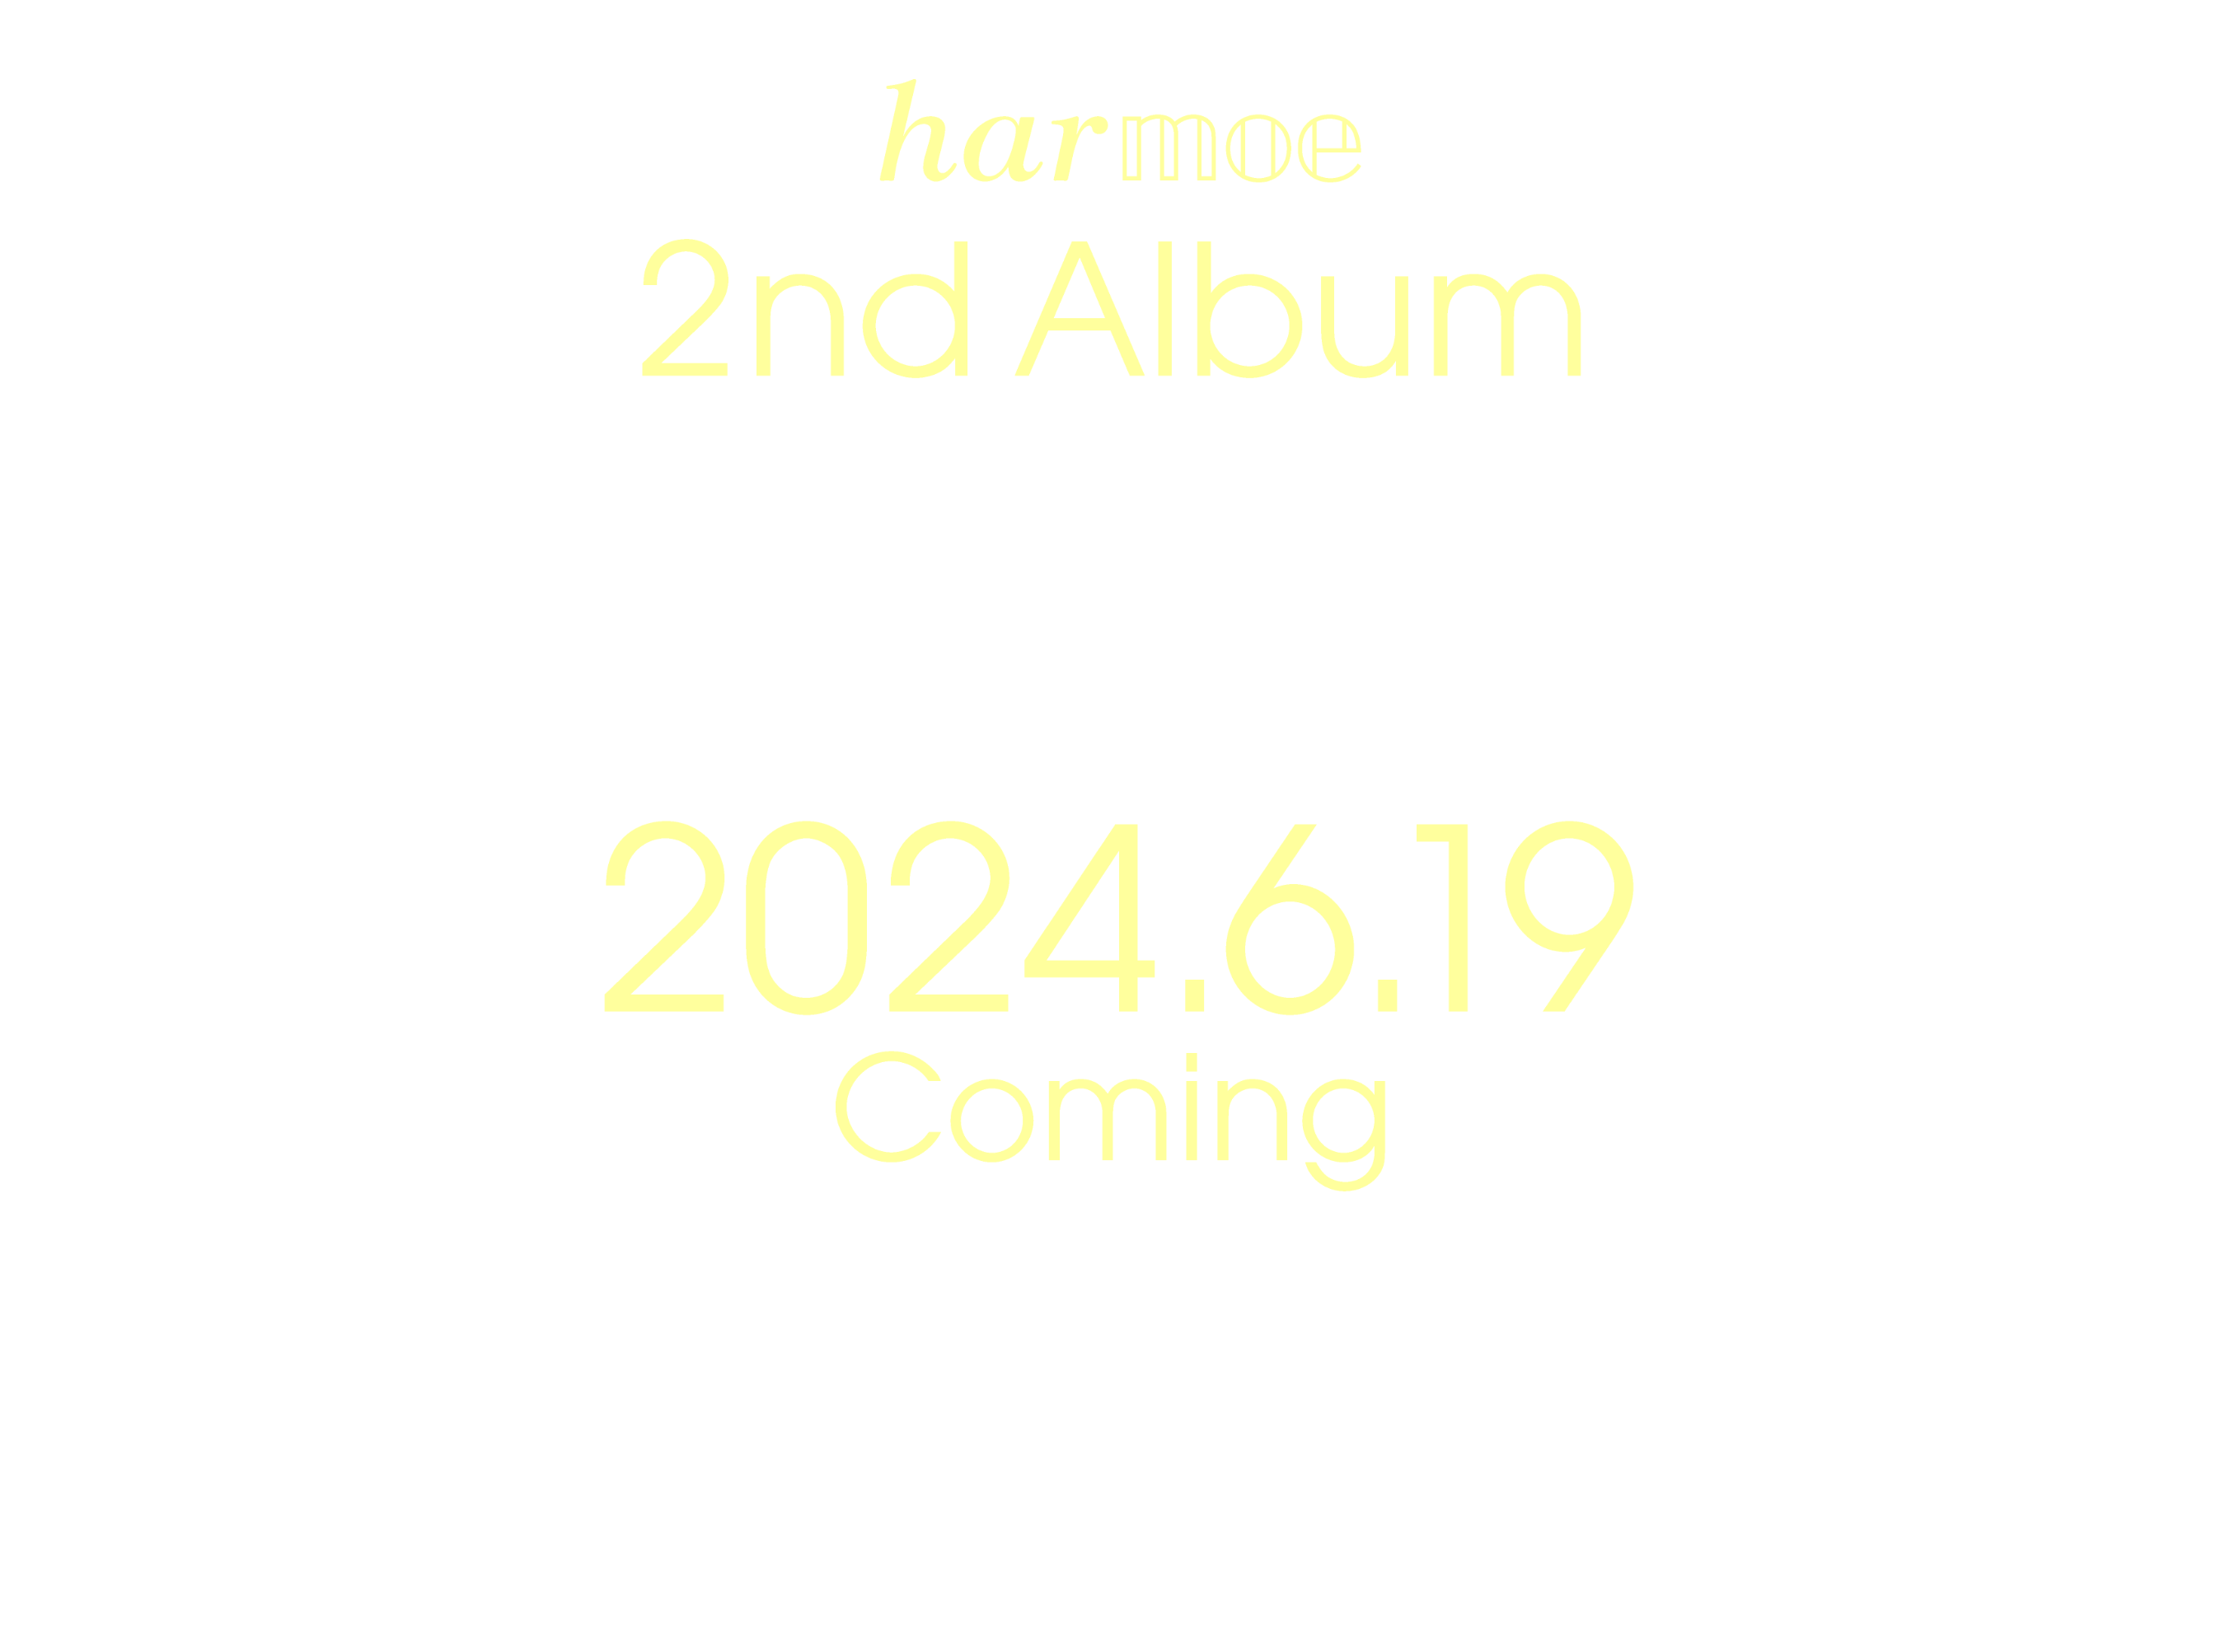 harmoe 2nd Album 2024.6.19 Coming